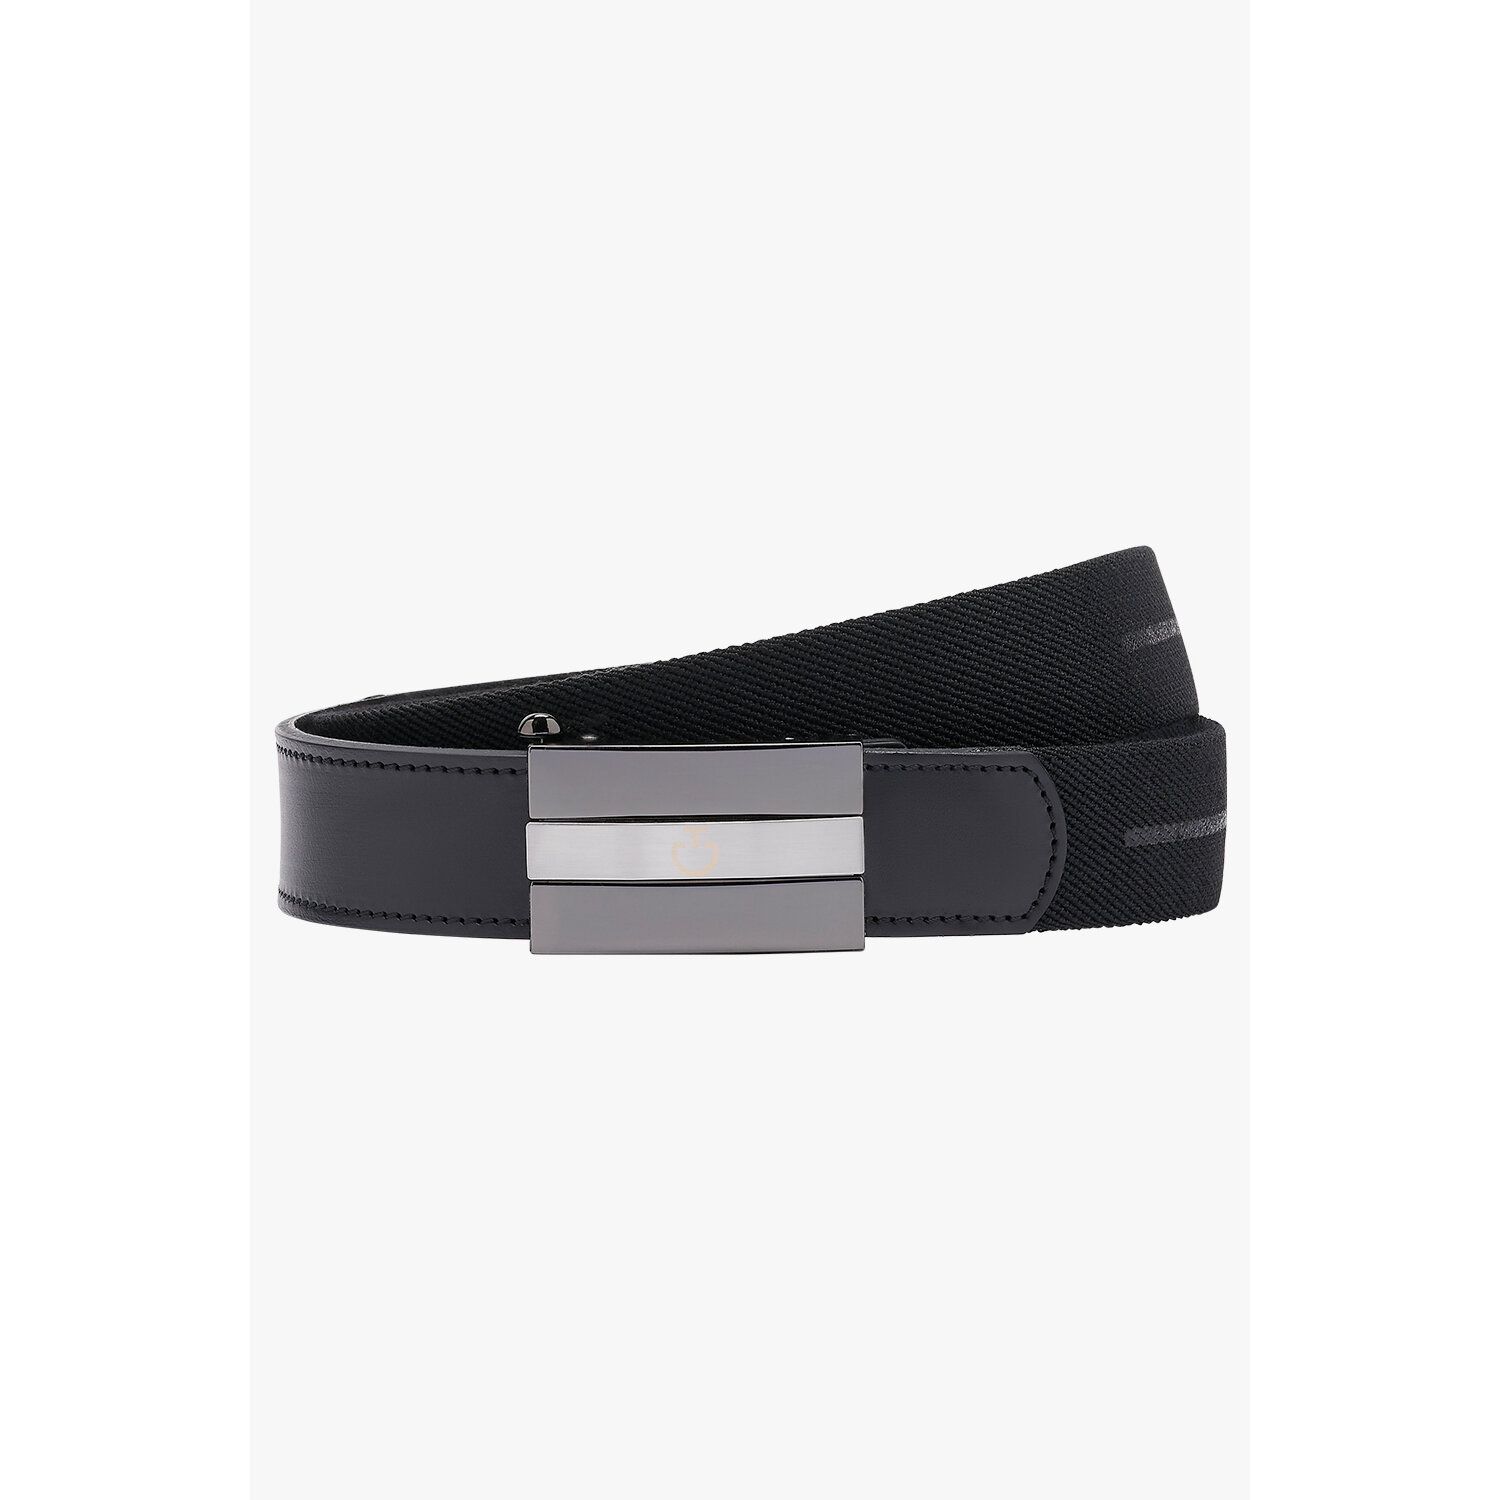 Men's elastic band belt with rubberized CT logo